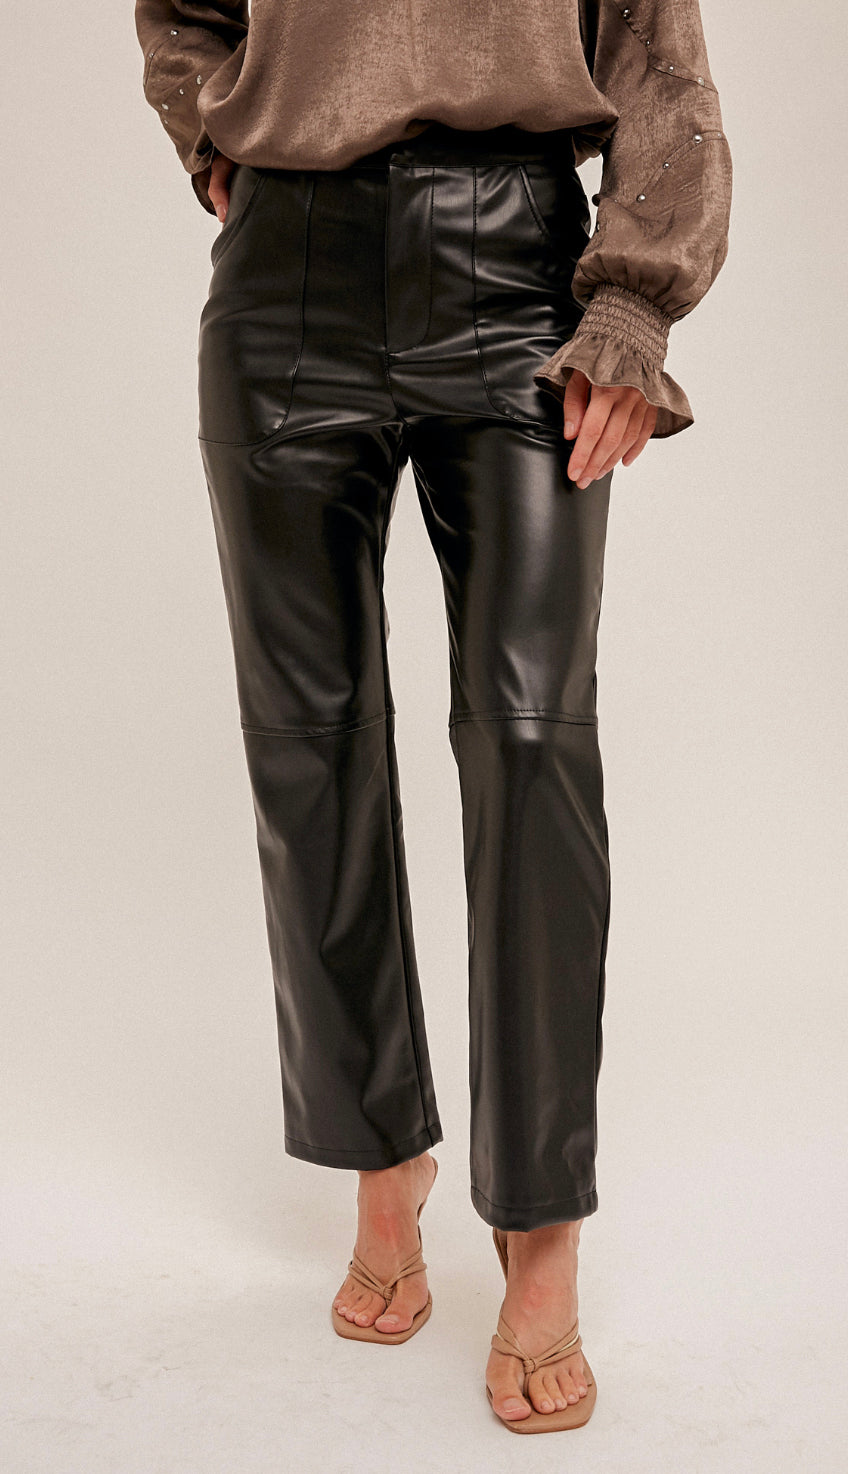 Urban Bliss faux-leather legging in black